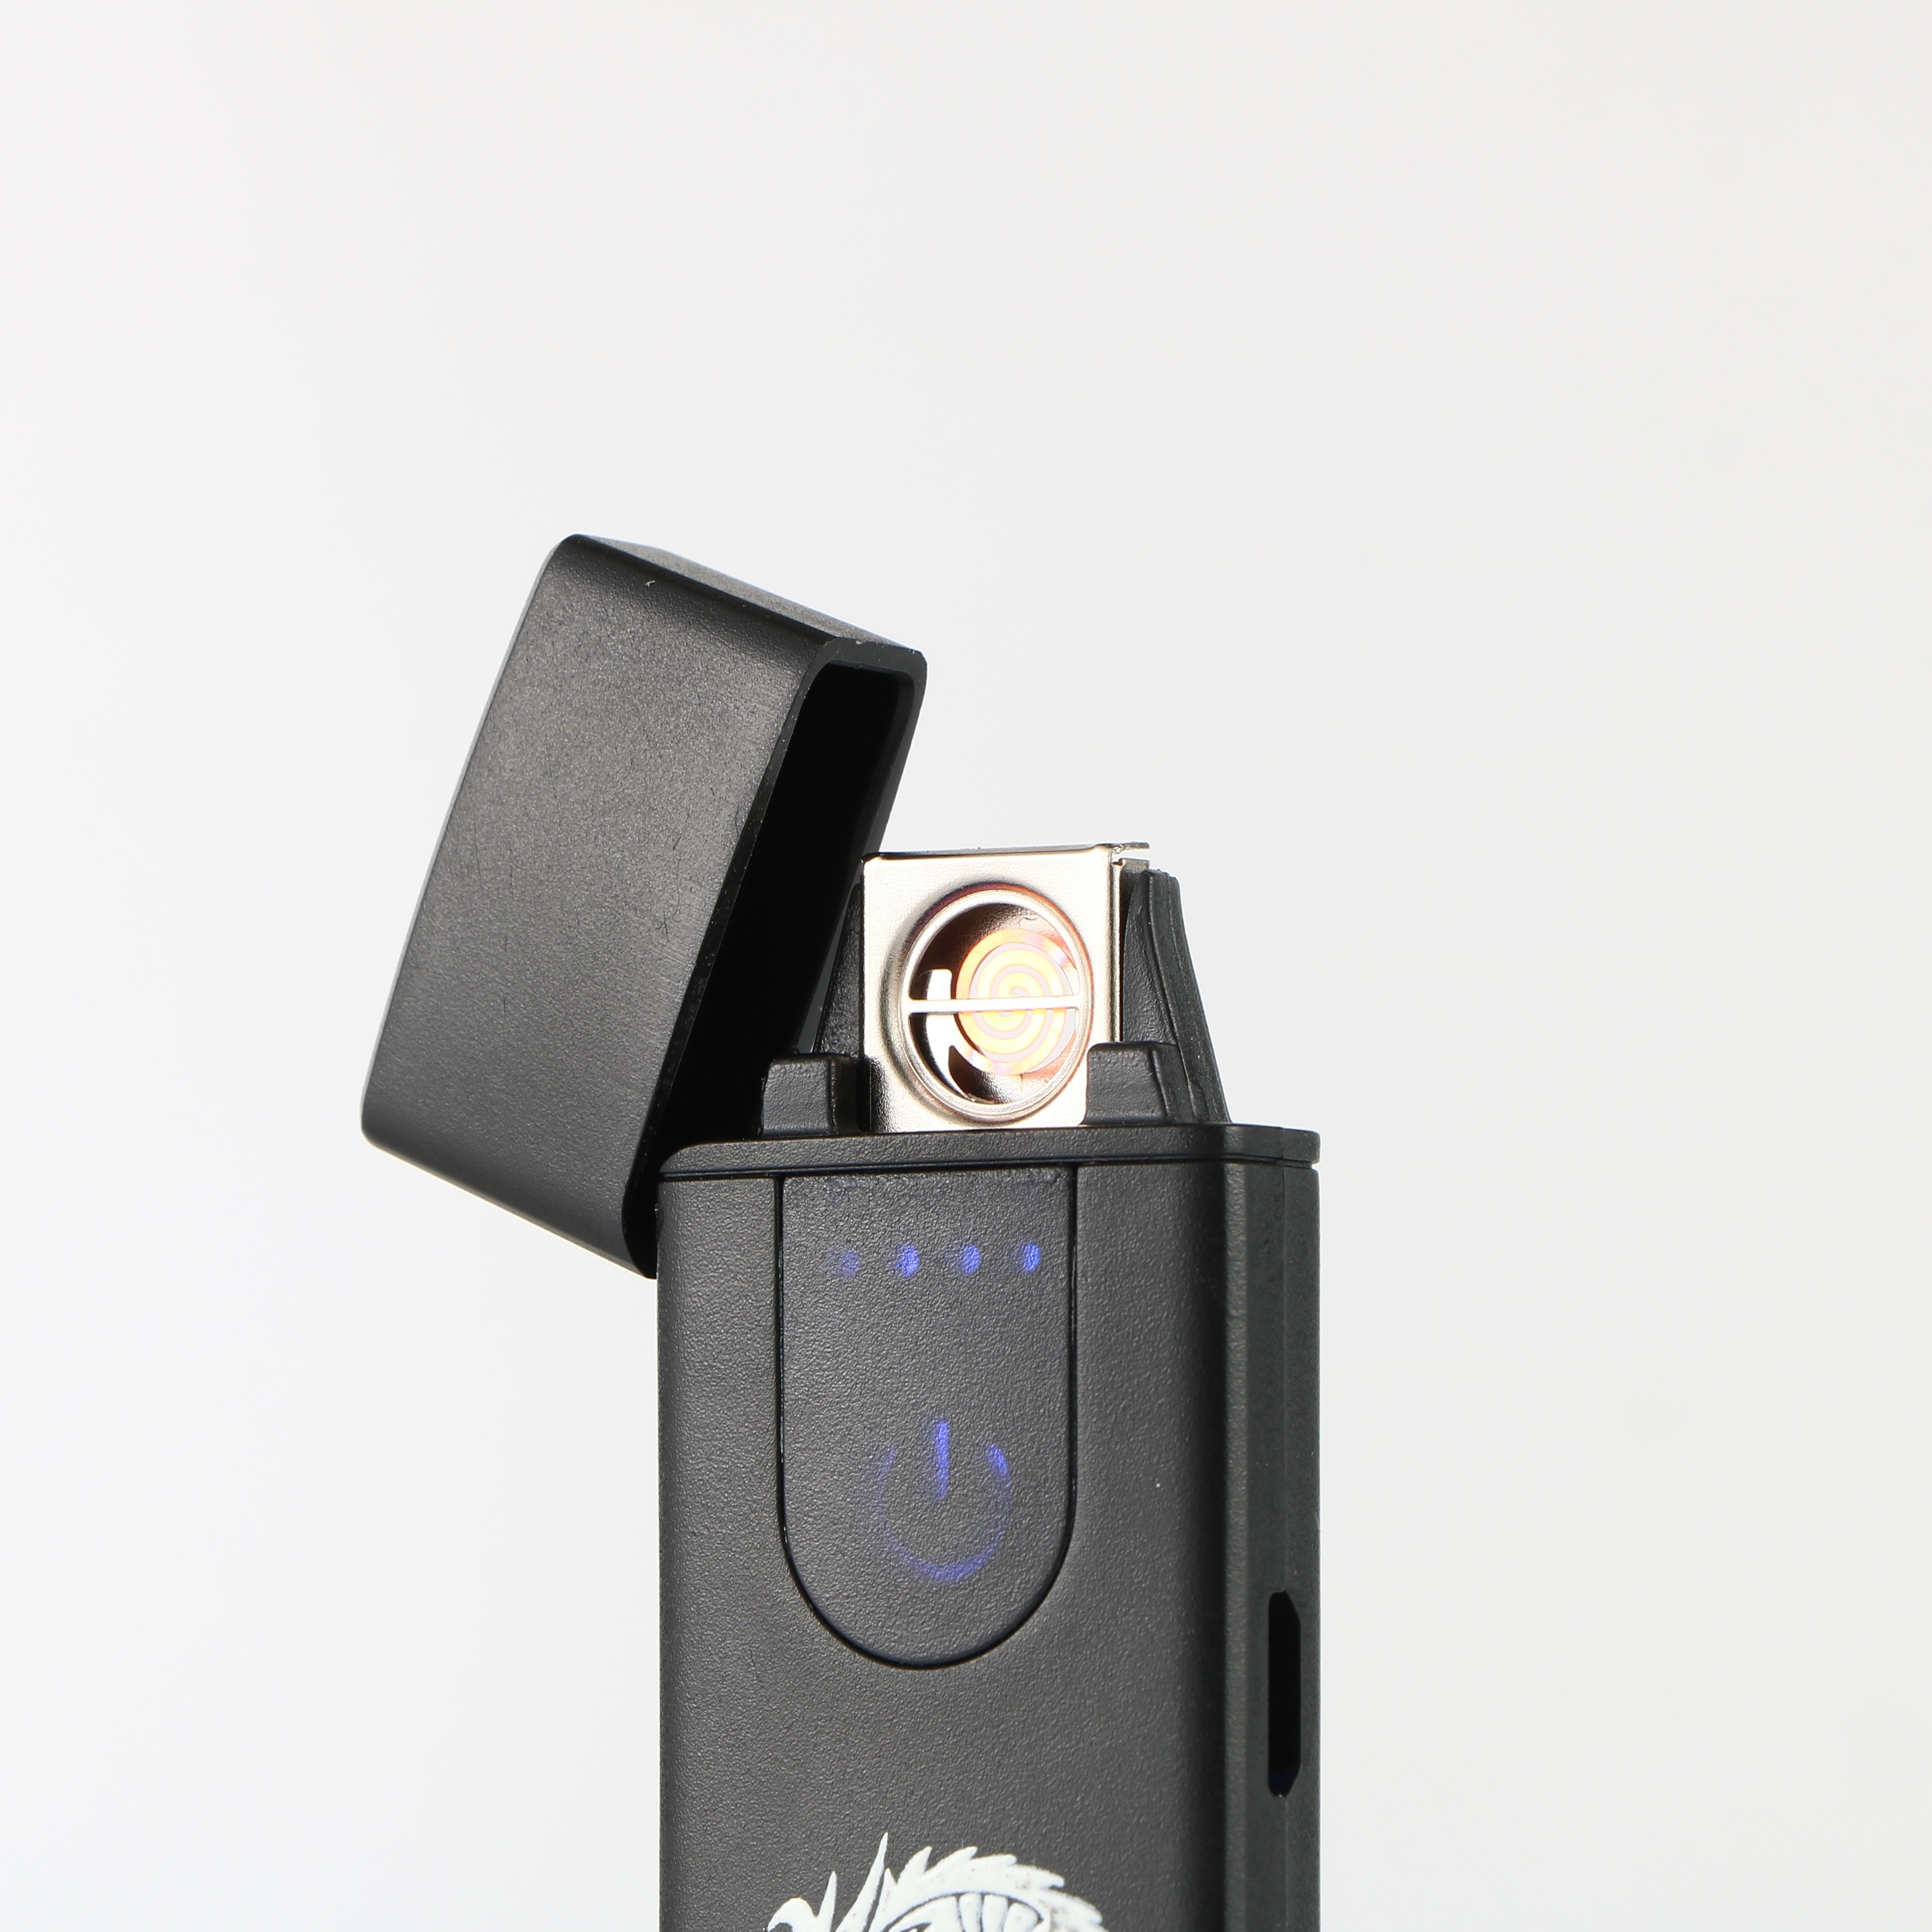  Encendedor electrónico, encendedor recargable por USB, mini  pantalla táctil creativa, pantalla LED, resistente al viento, encendedor  sin llama con cable de carga, encendedor silencioso para novios y padres  (azul-B) : Salud